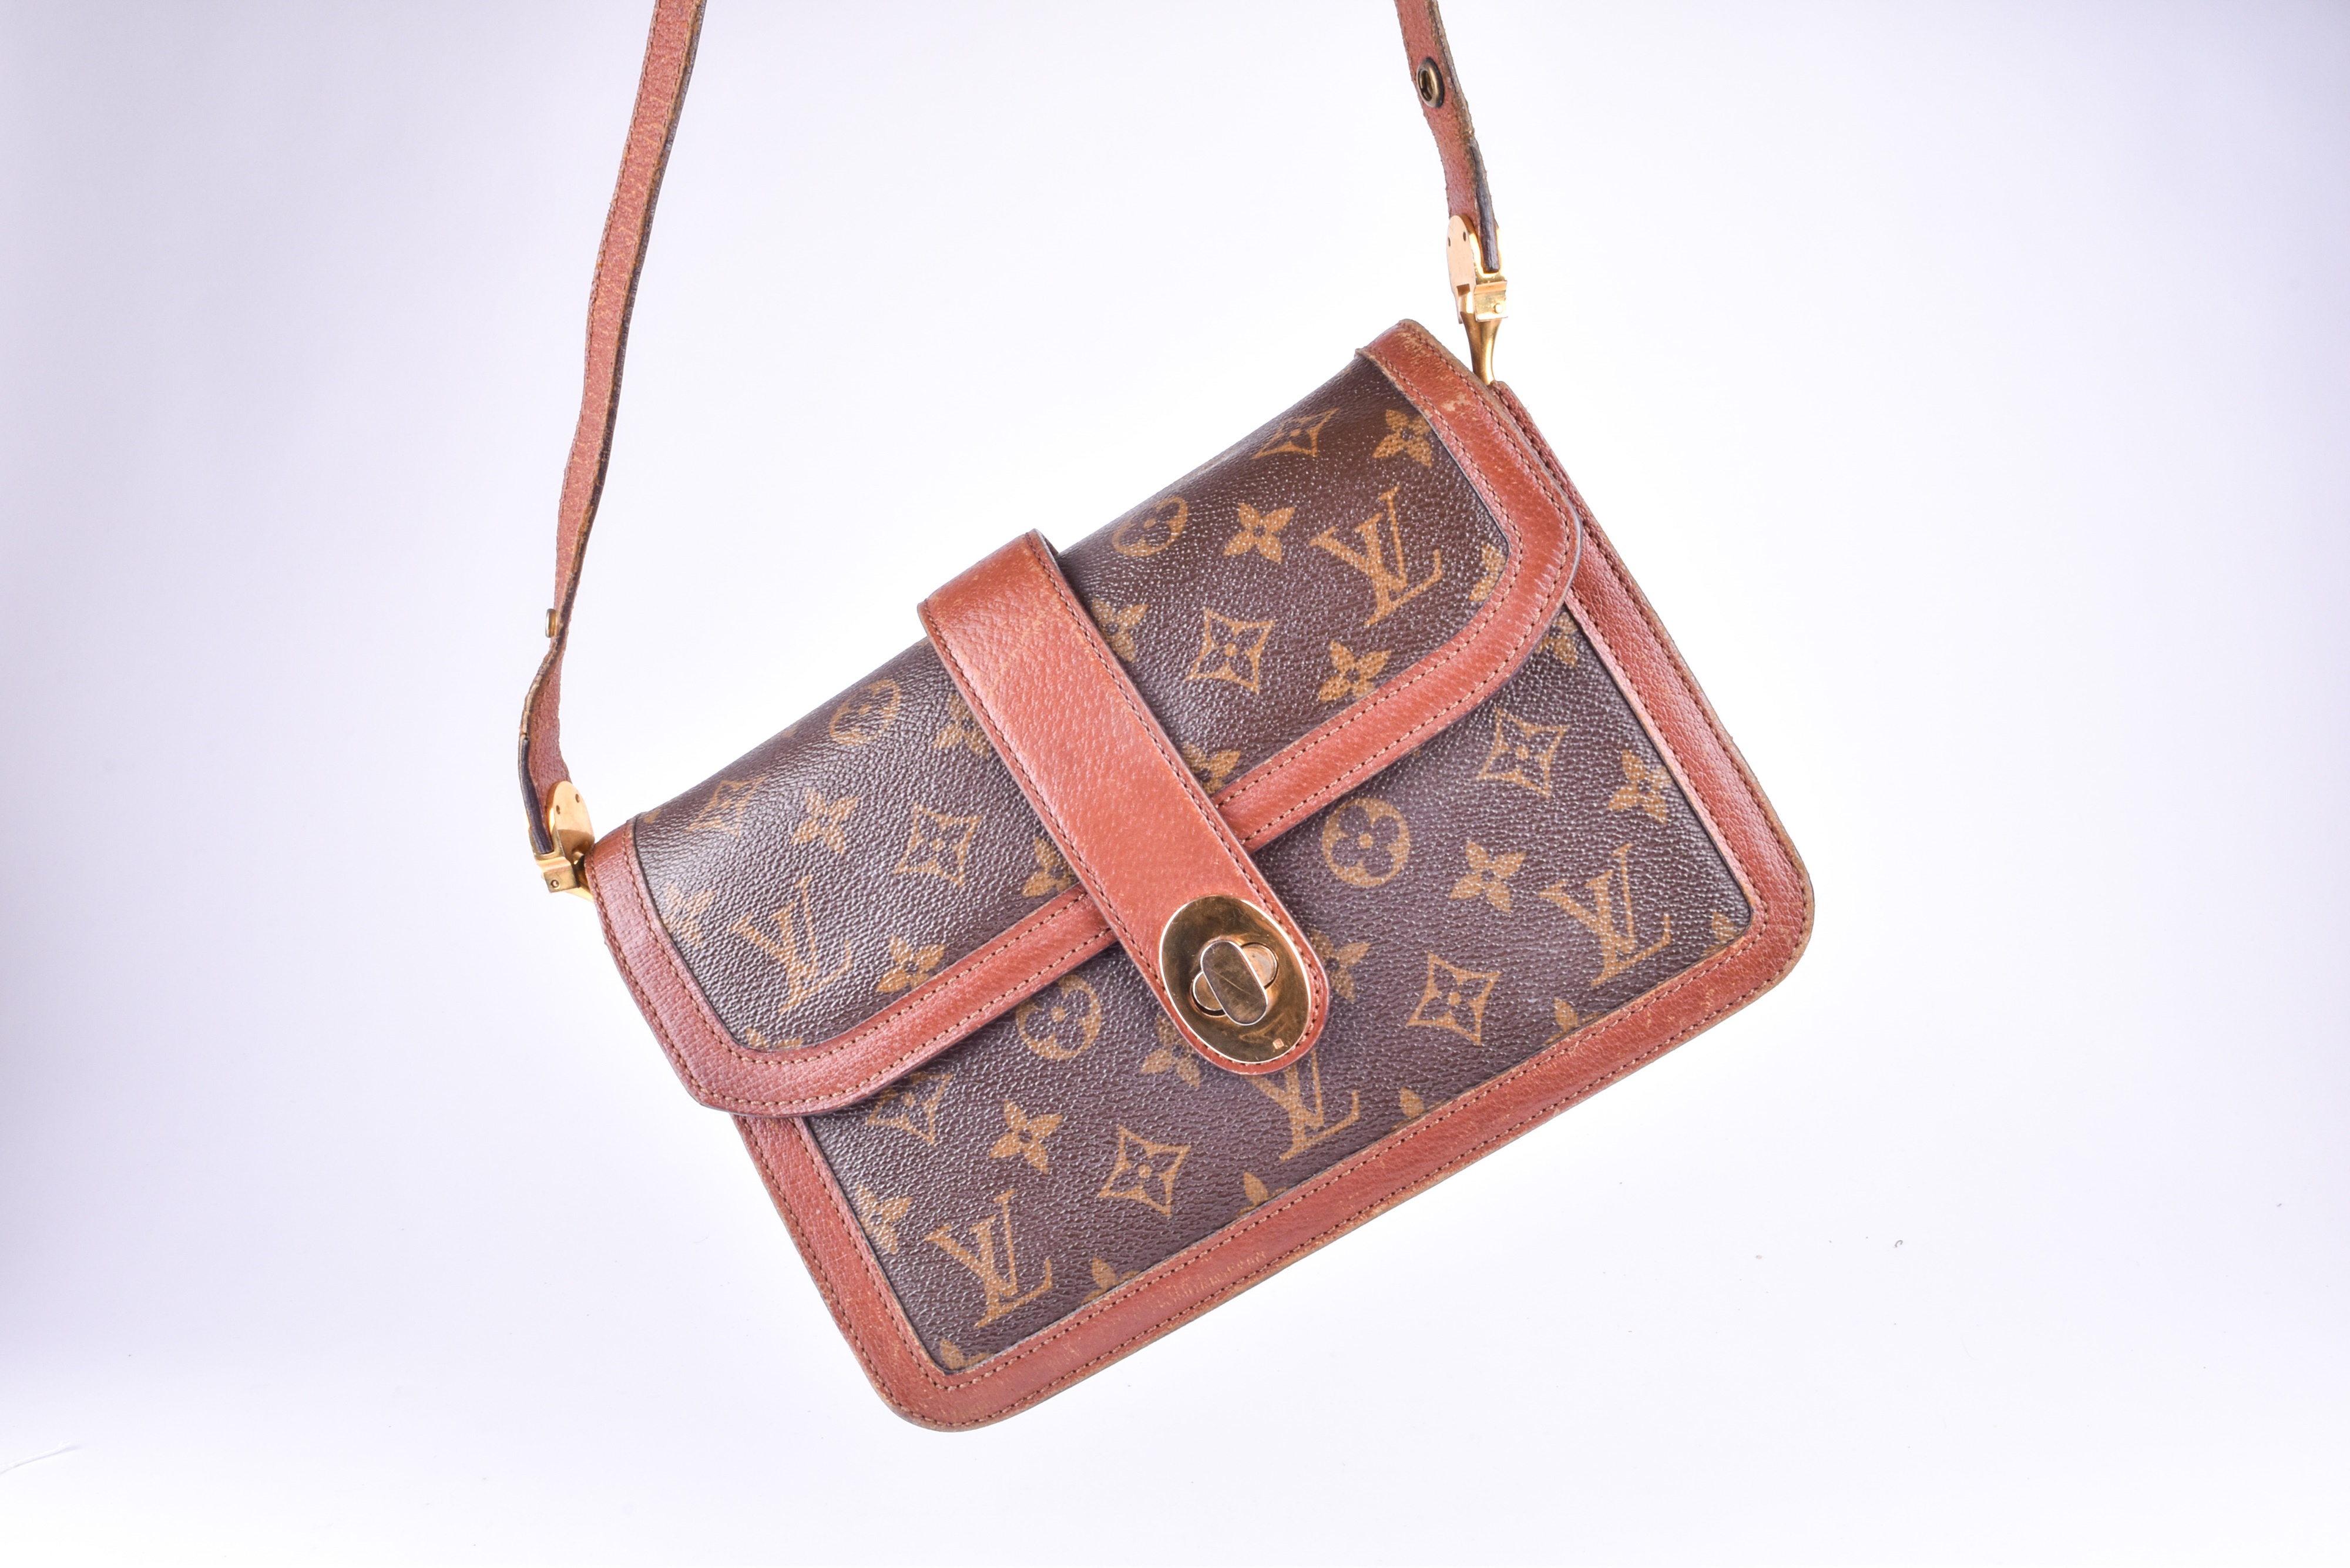 Sold at Auction: A Louis Vuitton monogram bucket bag 1980s